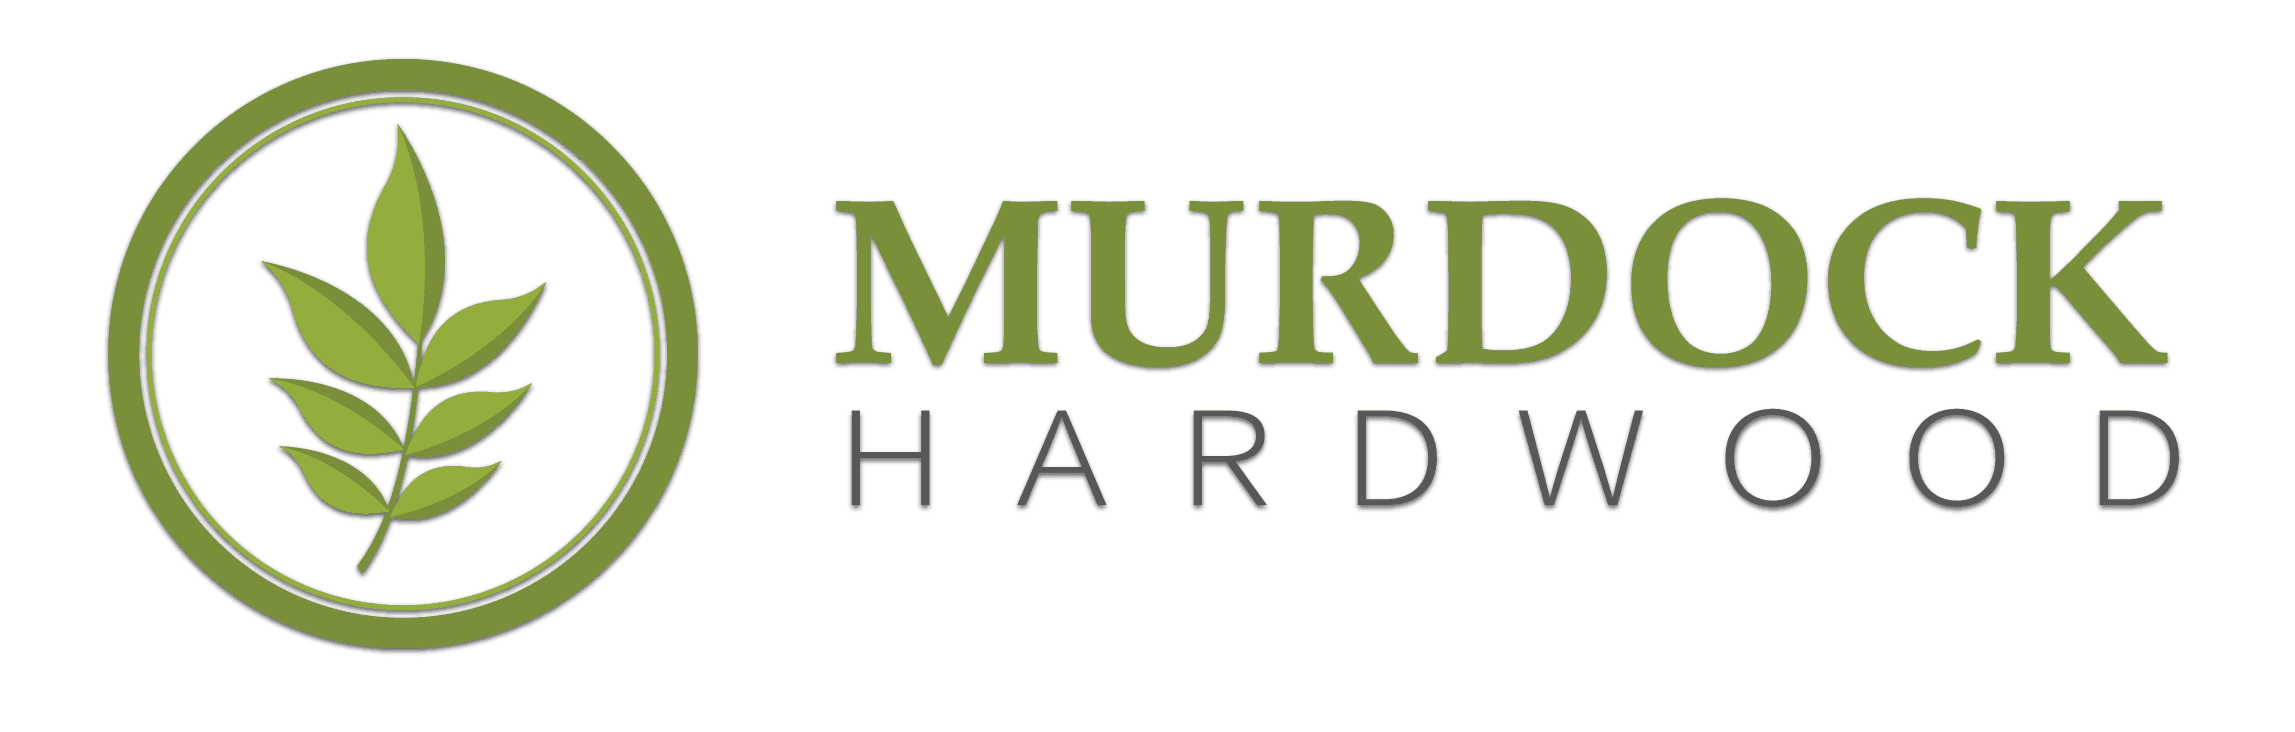 Murdock Hardwood Industries | Newry | Country Down